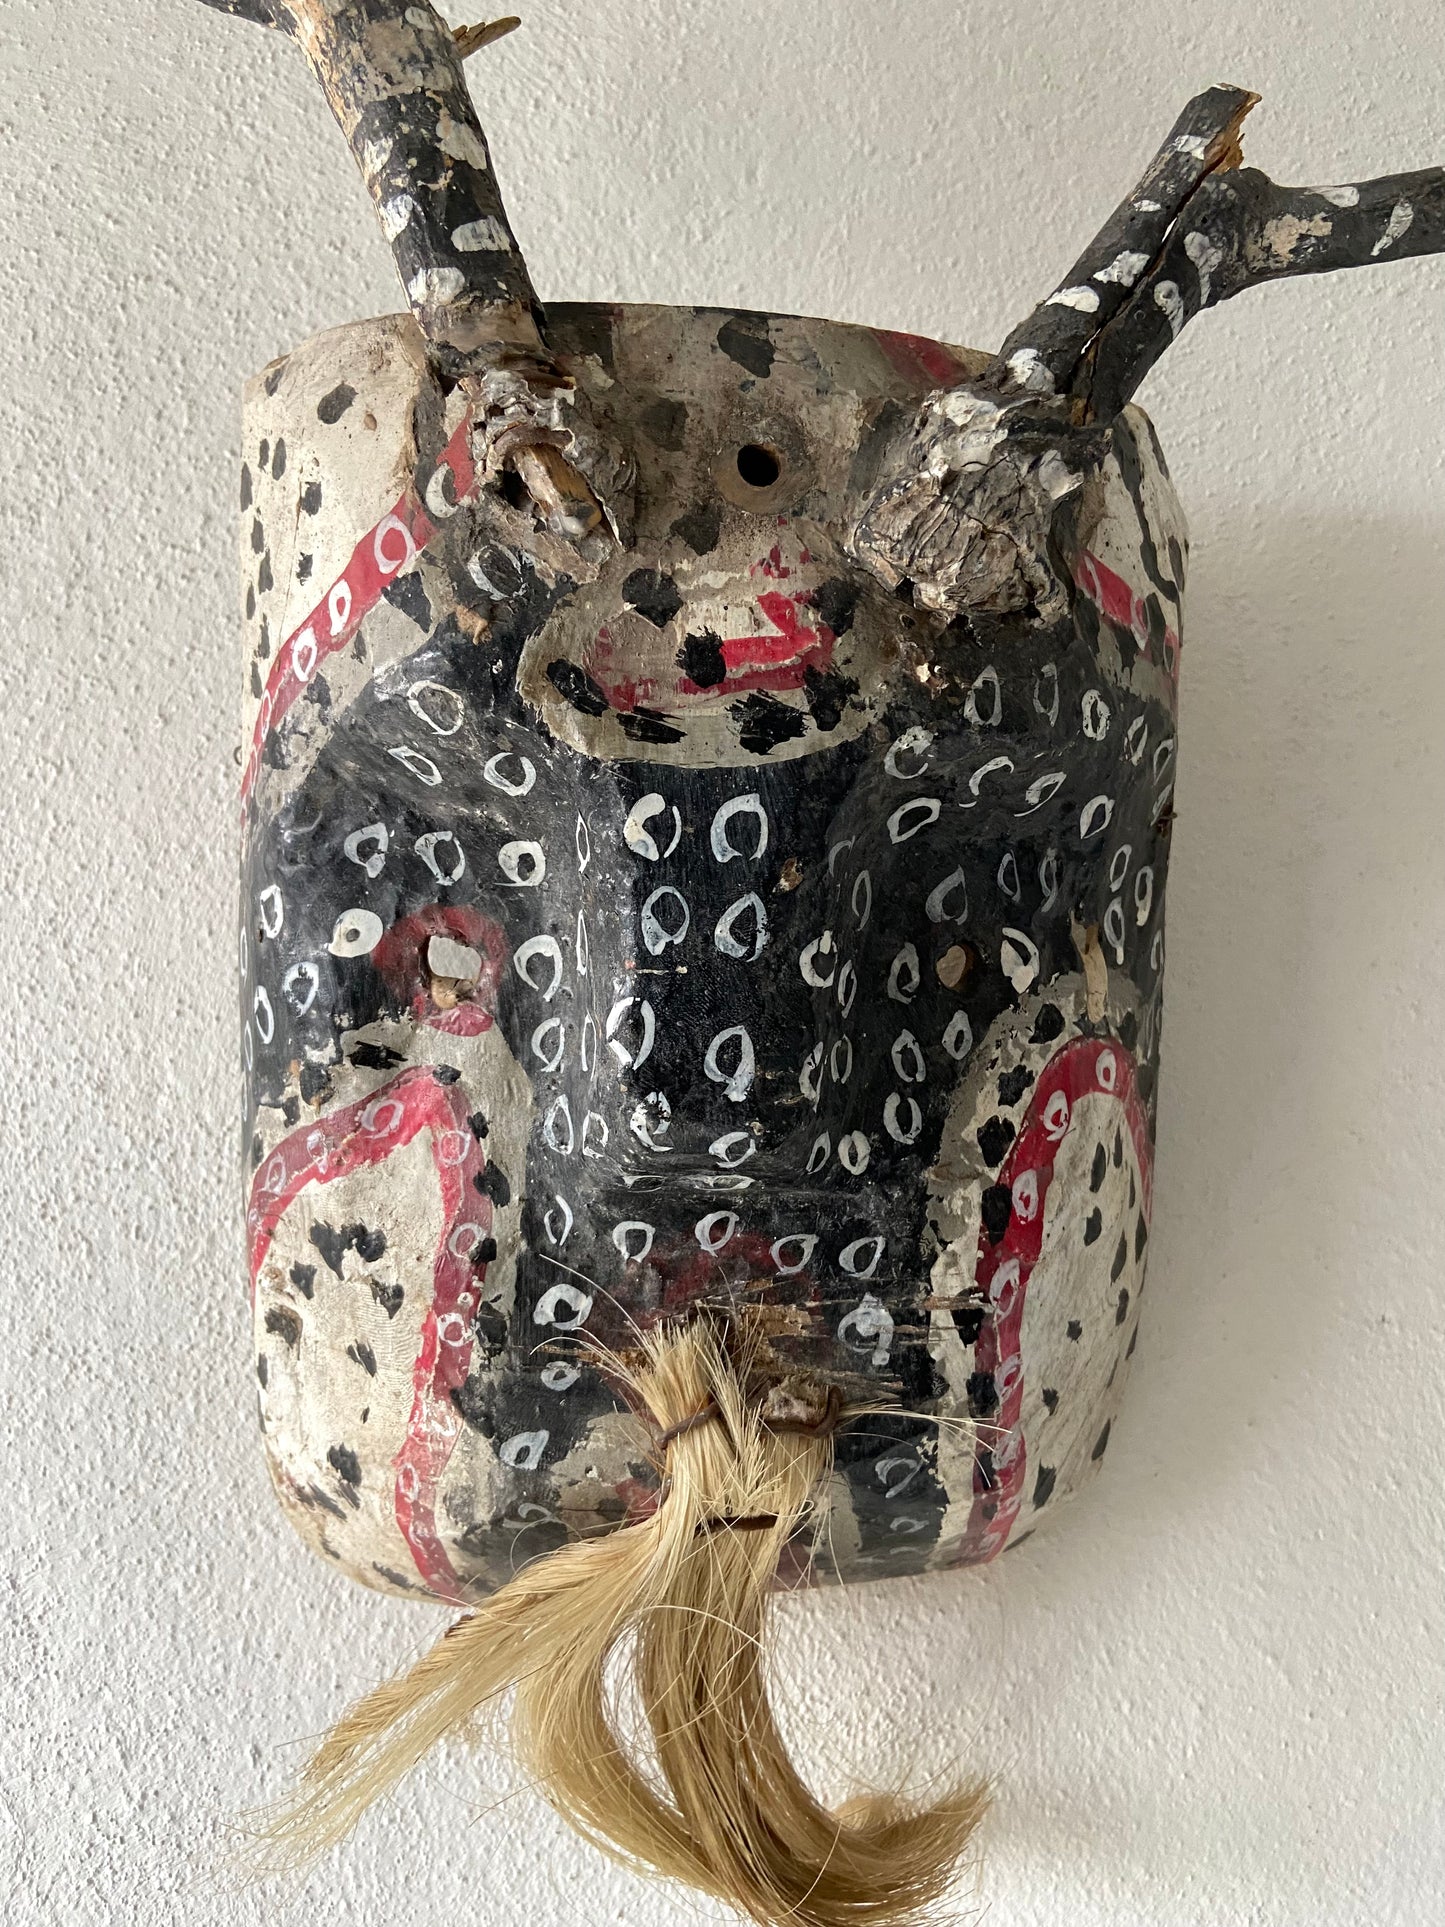 Máscara de la Costa Chica de Guerrero/ Hardwood Mask from Costa Chica, Guerrero